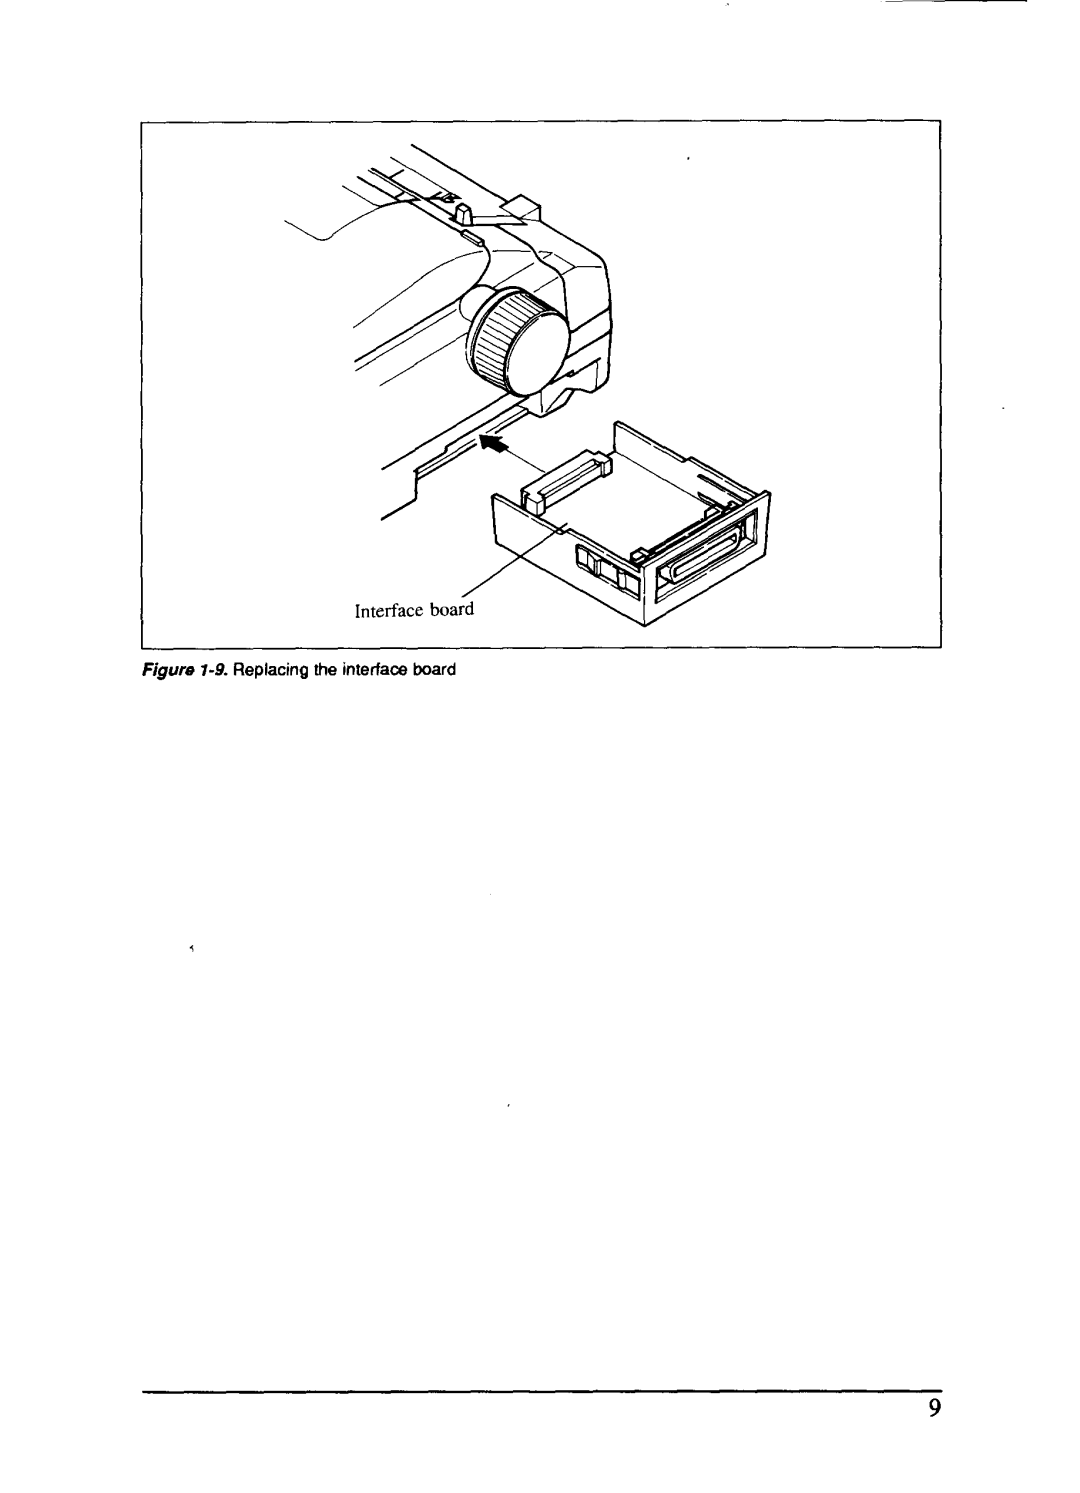 Star Micronics LC24-15 user manual 9. Replacing the interface board 